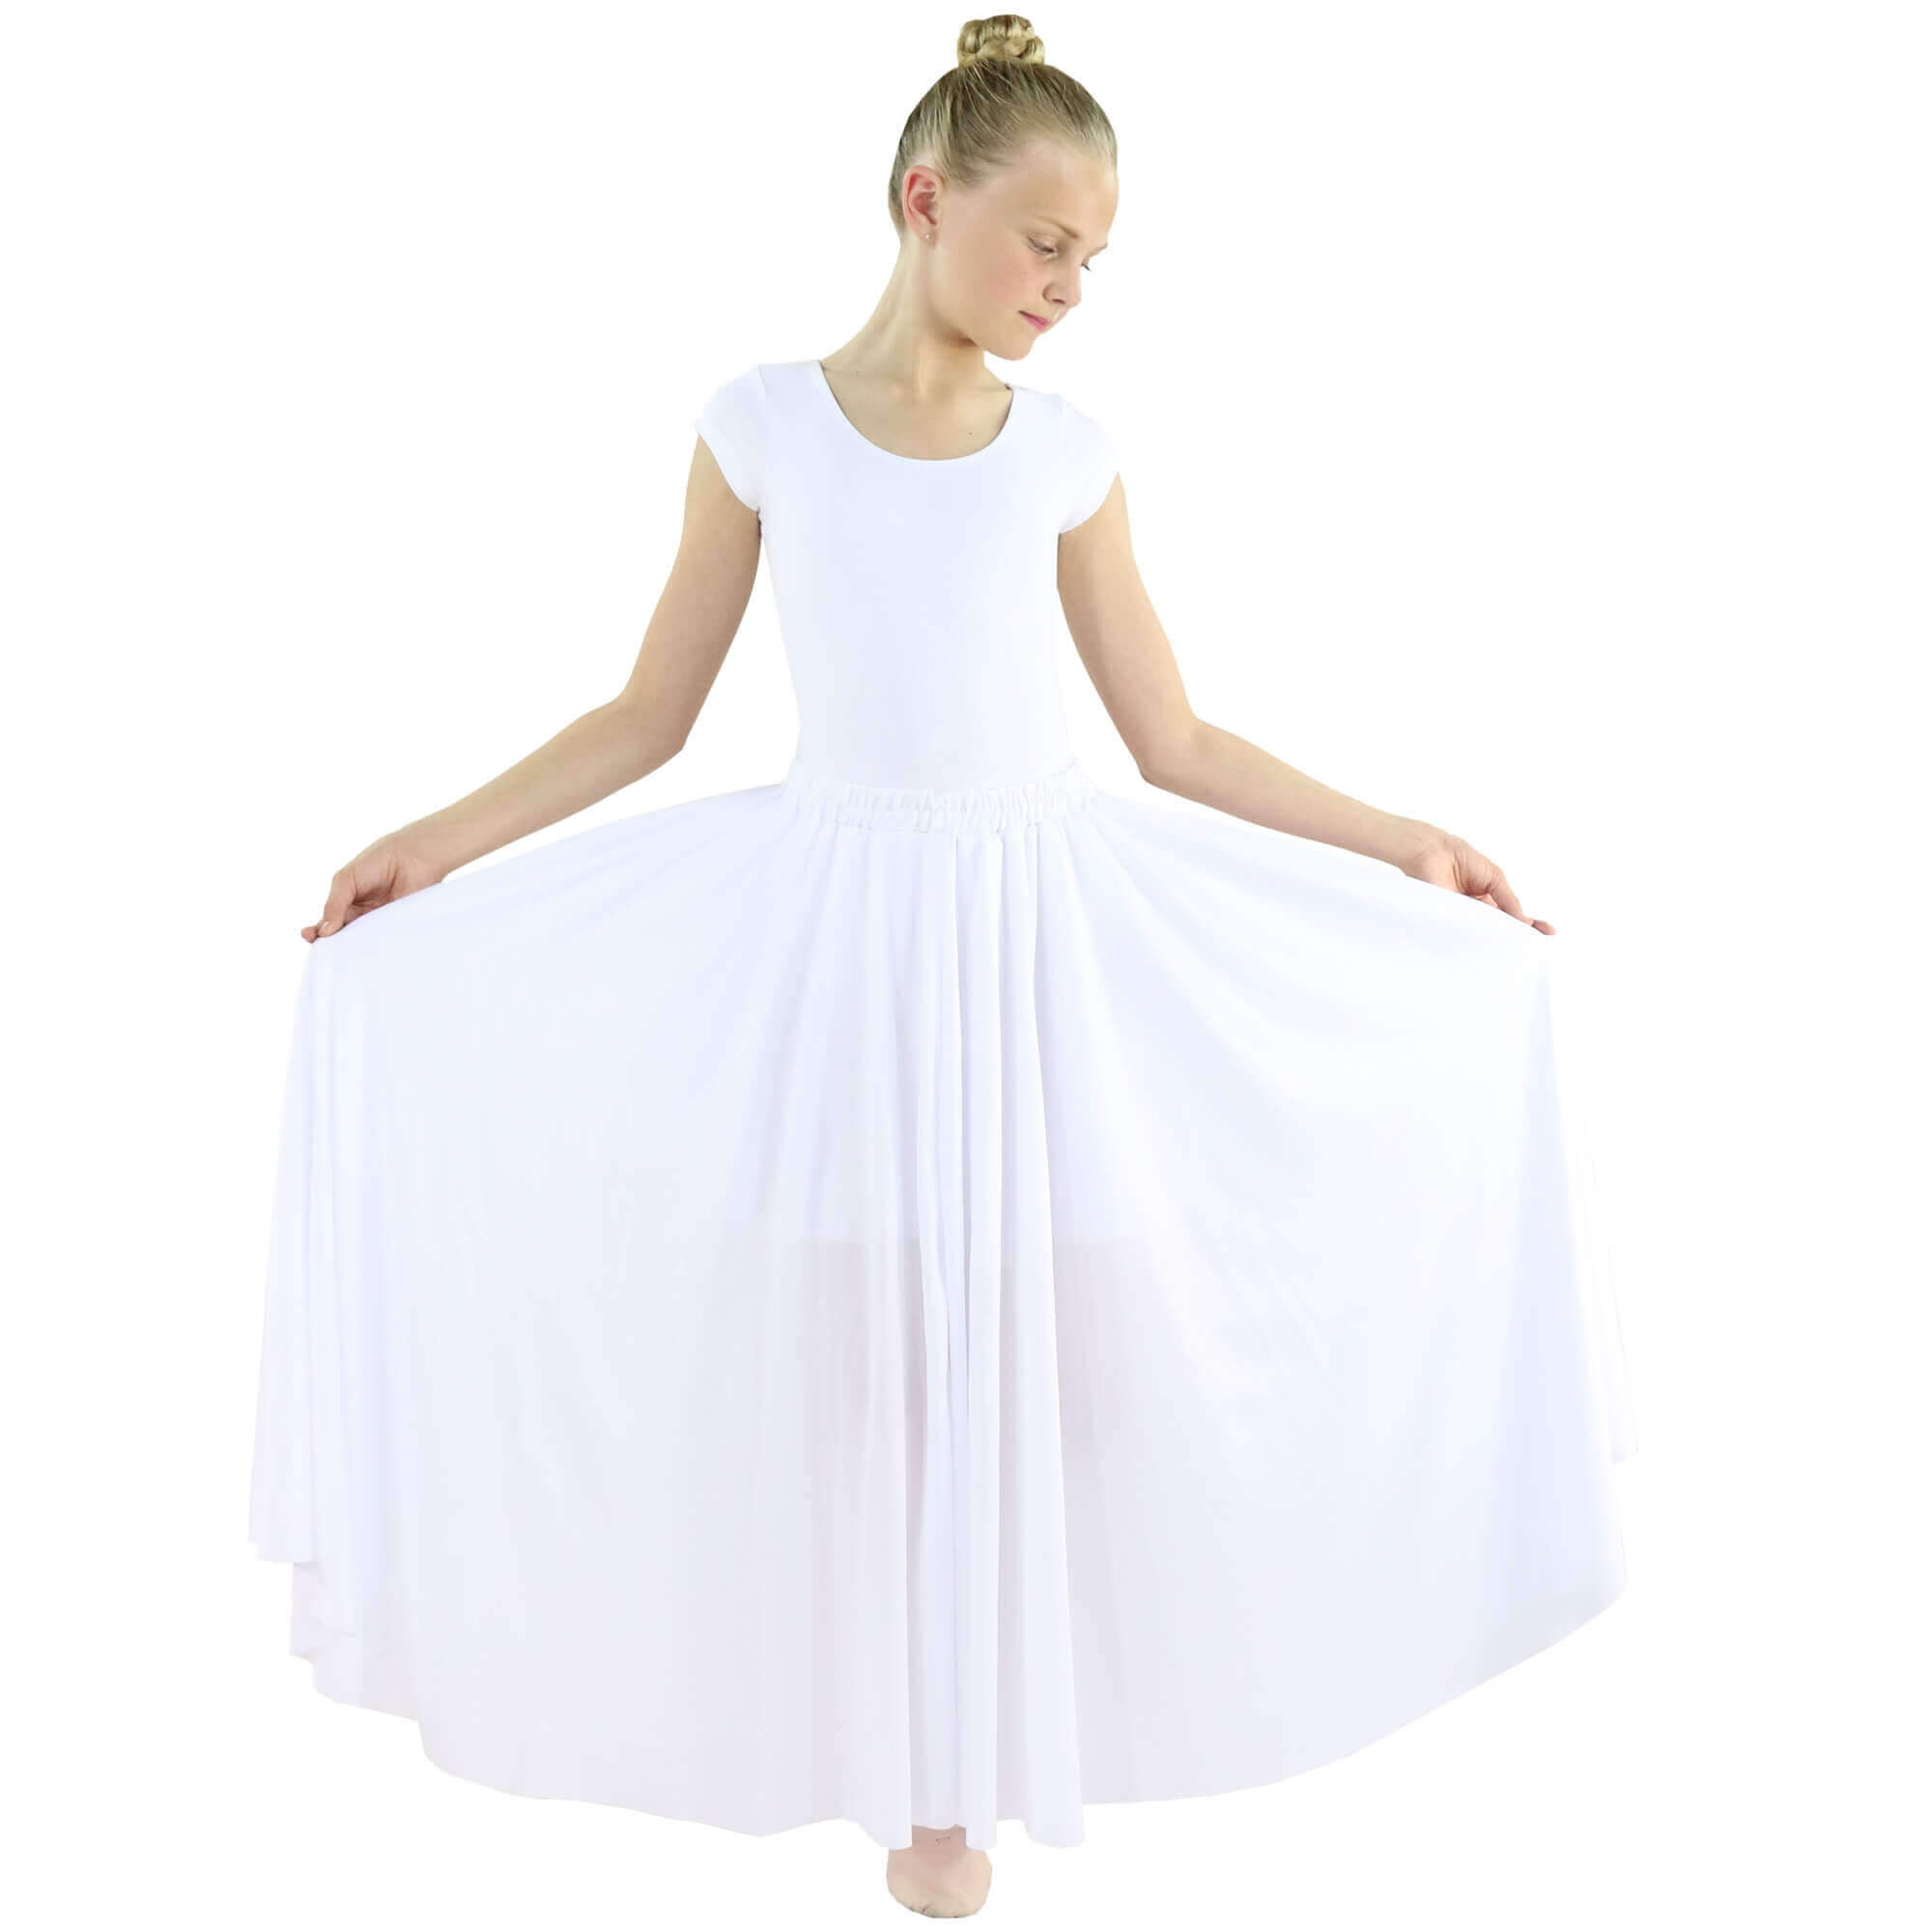 Danzcue Child Long Circle Skirt [WSK203C] - $24.49